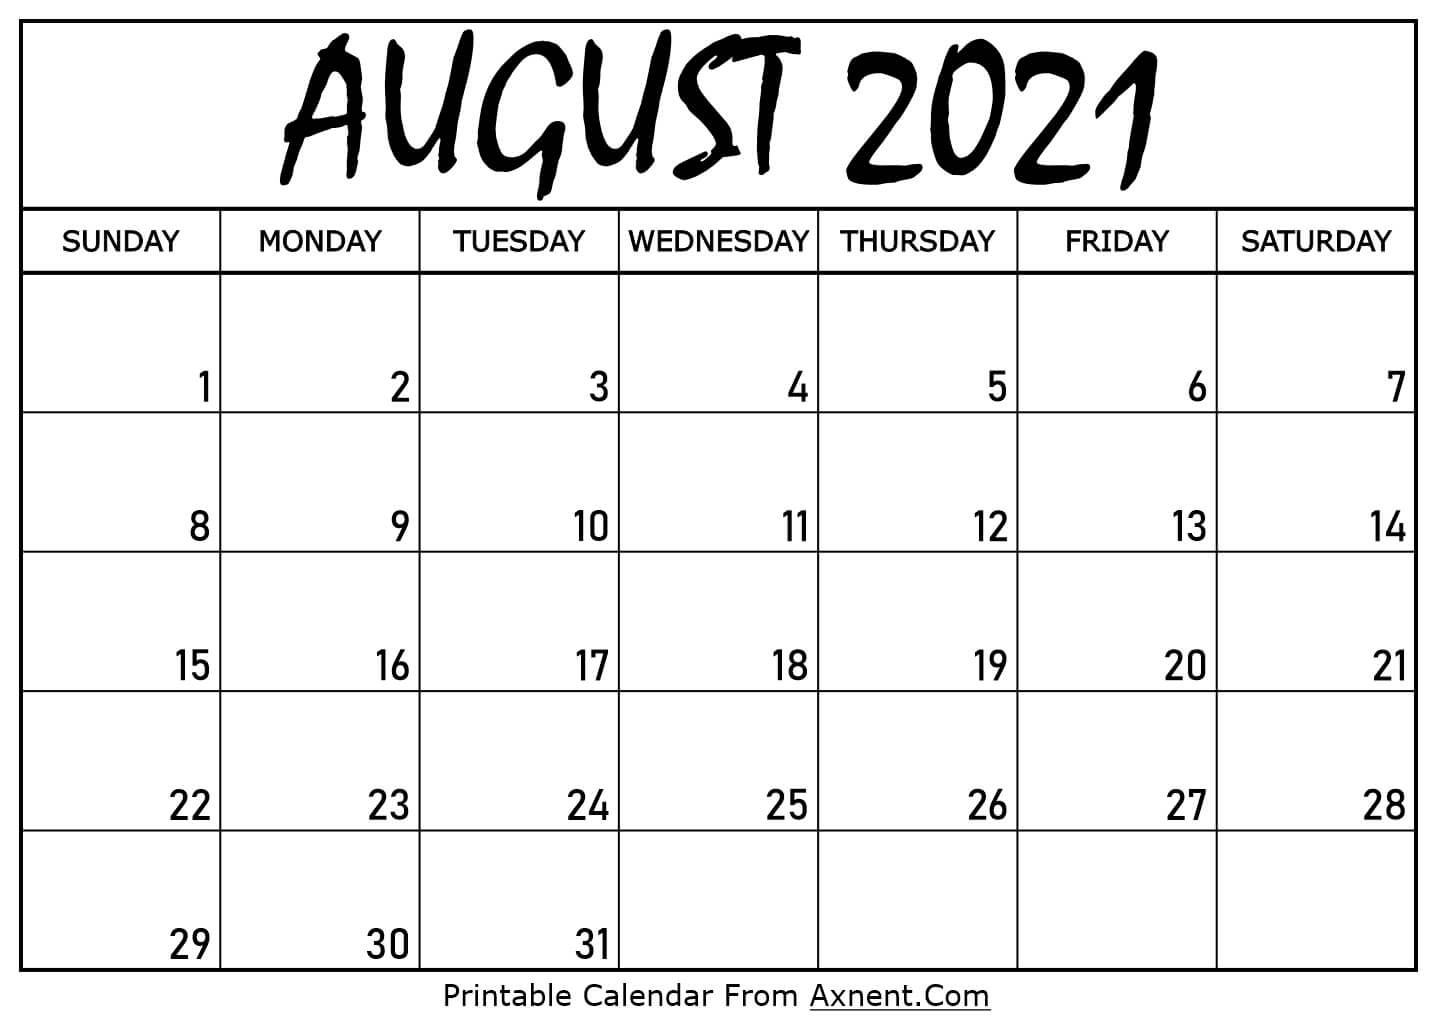 Printable August 2021 Calendar Template - Print Now-August 2021 Calendar Printable